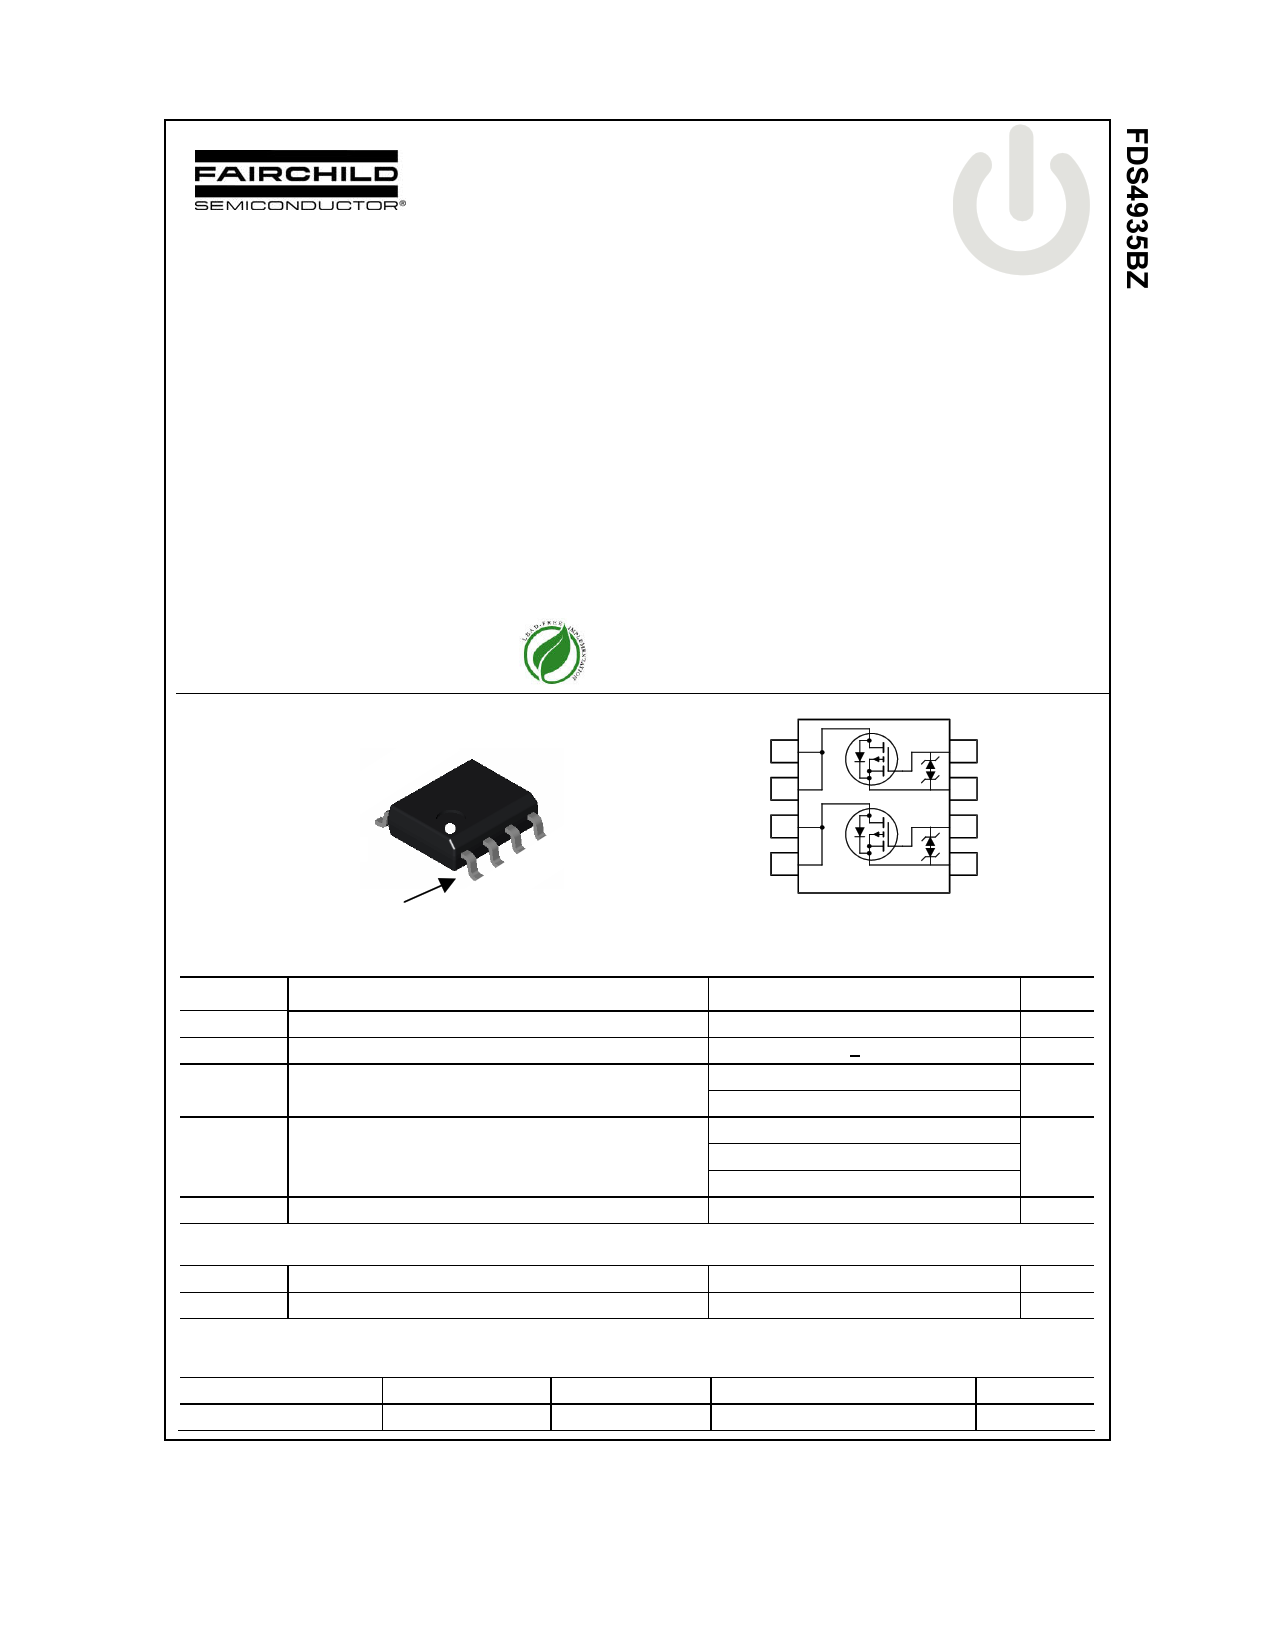 FDS4935BZ datasheet, circuit